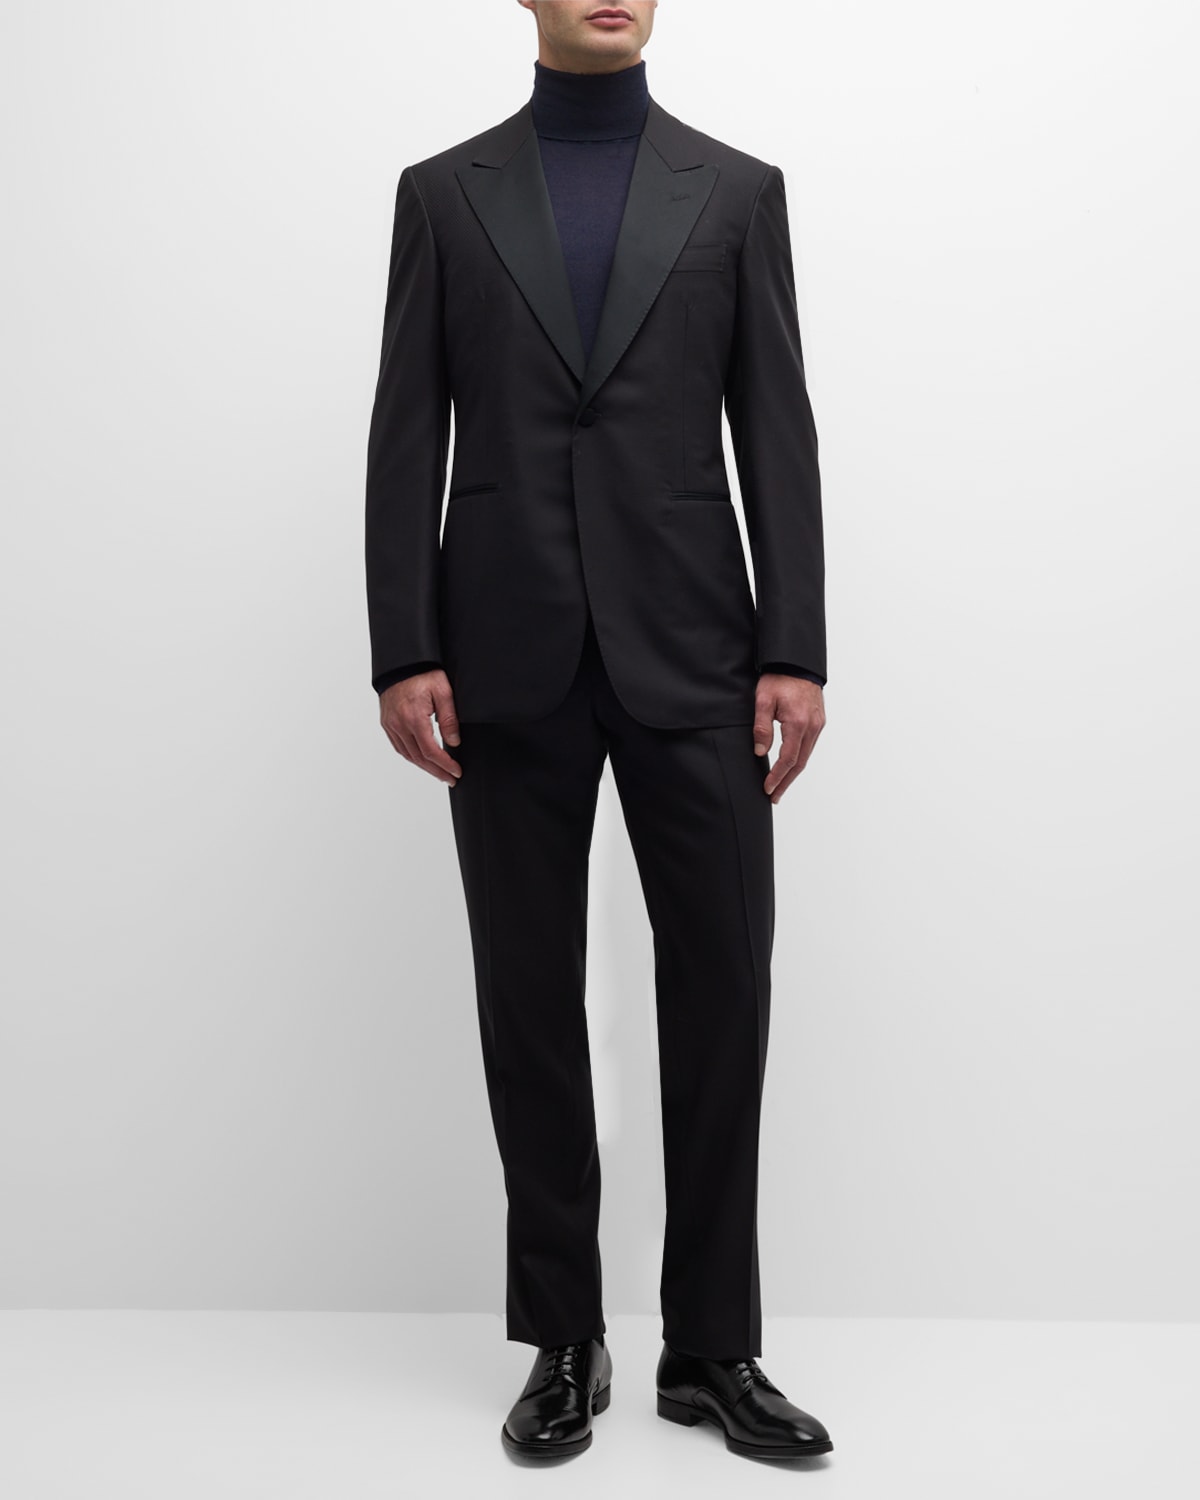 Stefano Ricci Men's Textured Wool One-button Tuxedo In Black